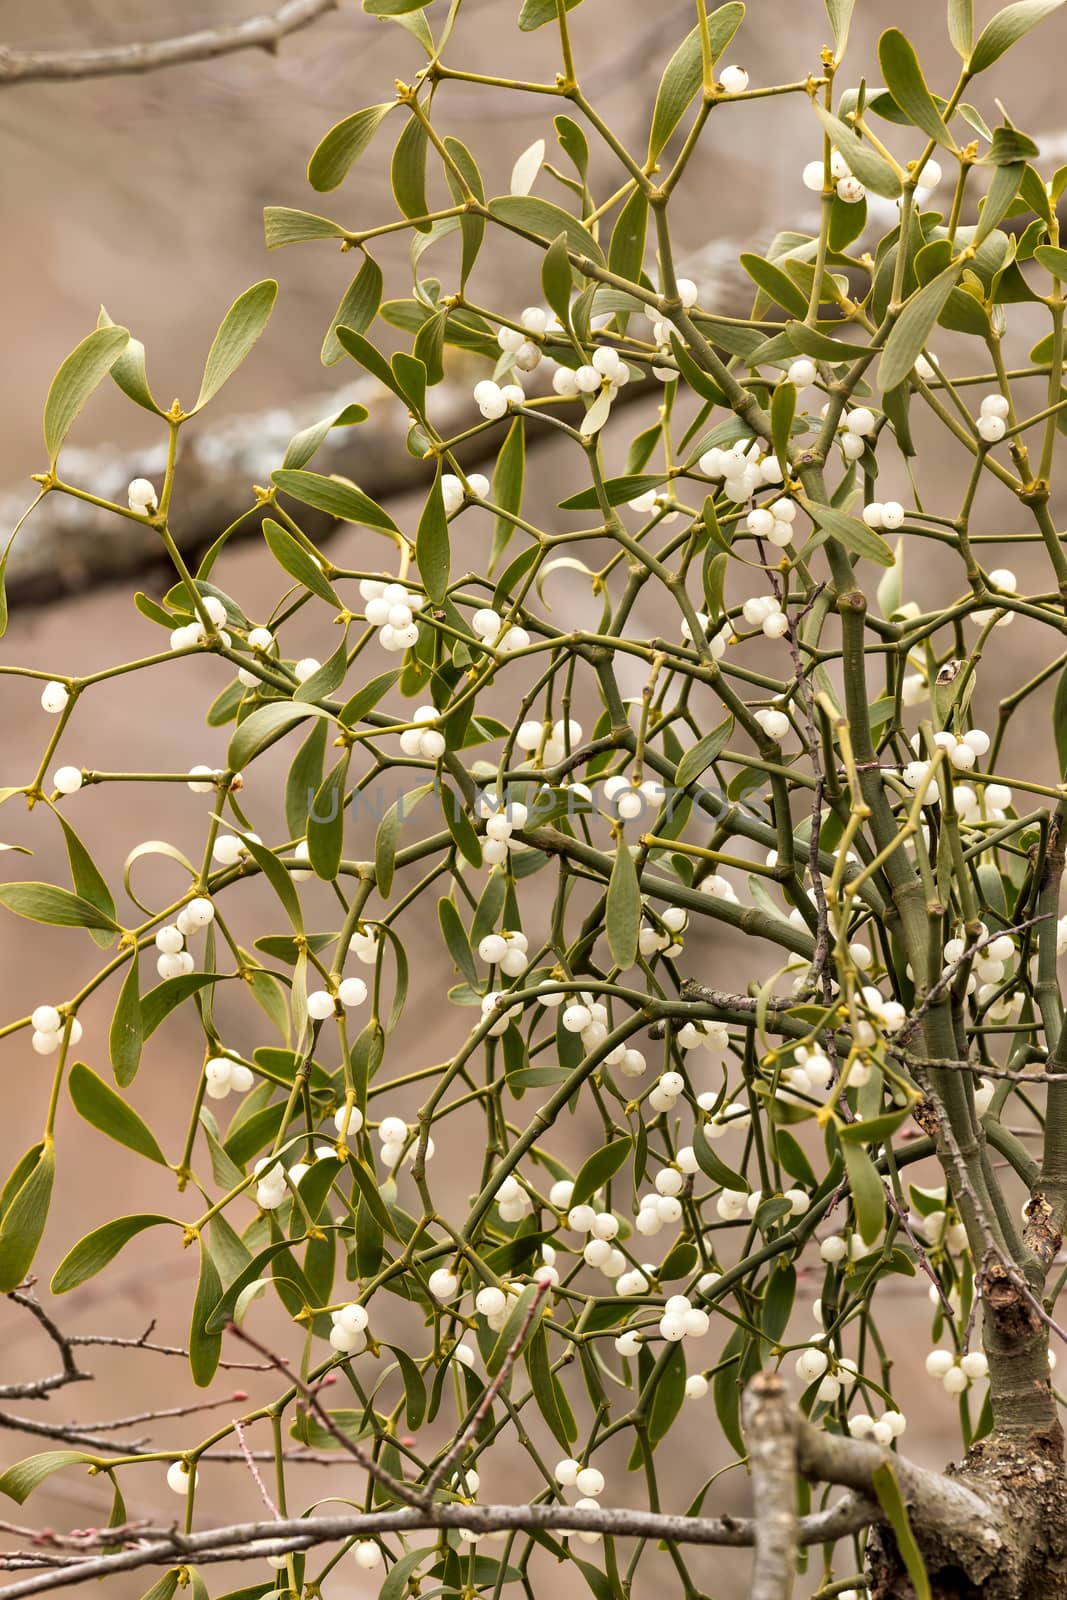 Mistletoe white berries - Viscum album by Digoarpi